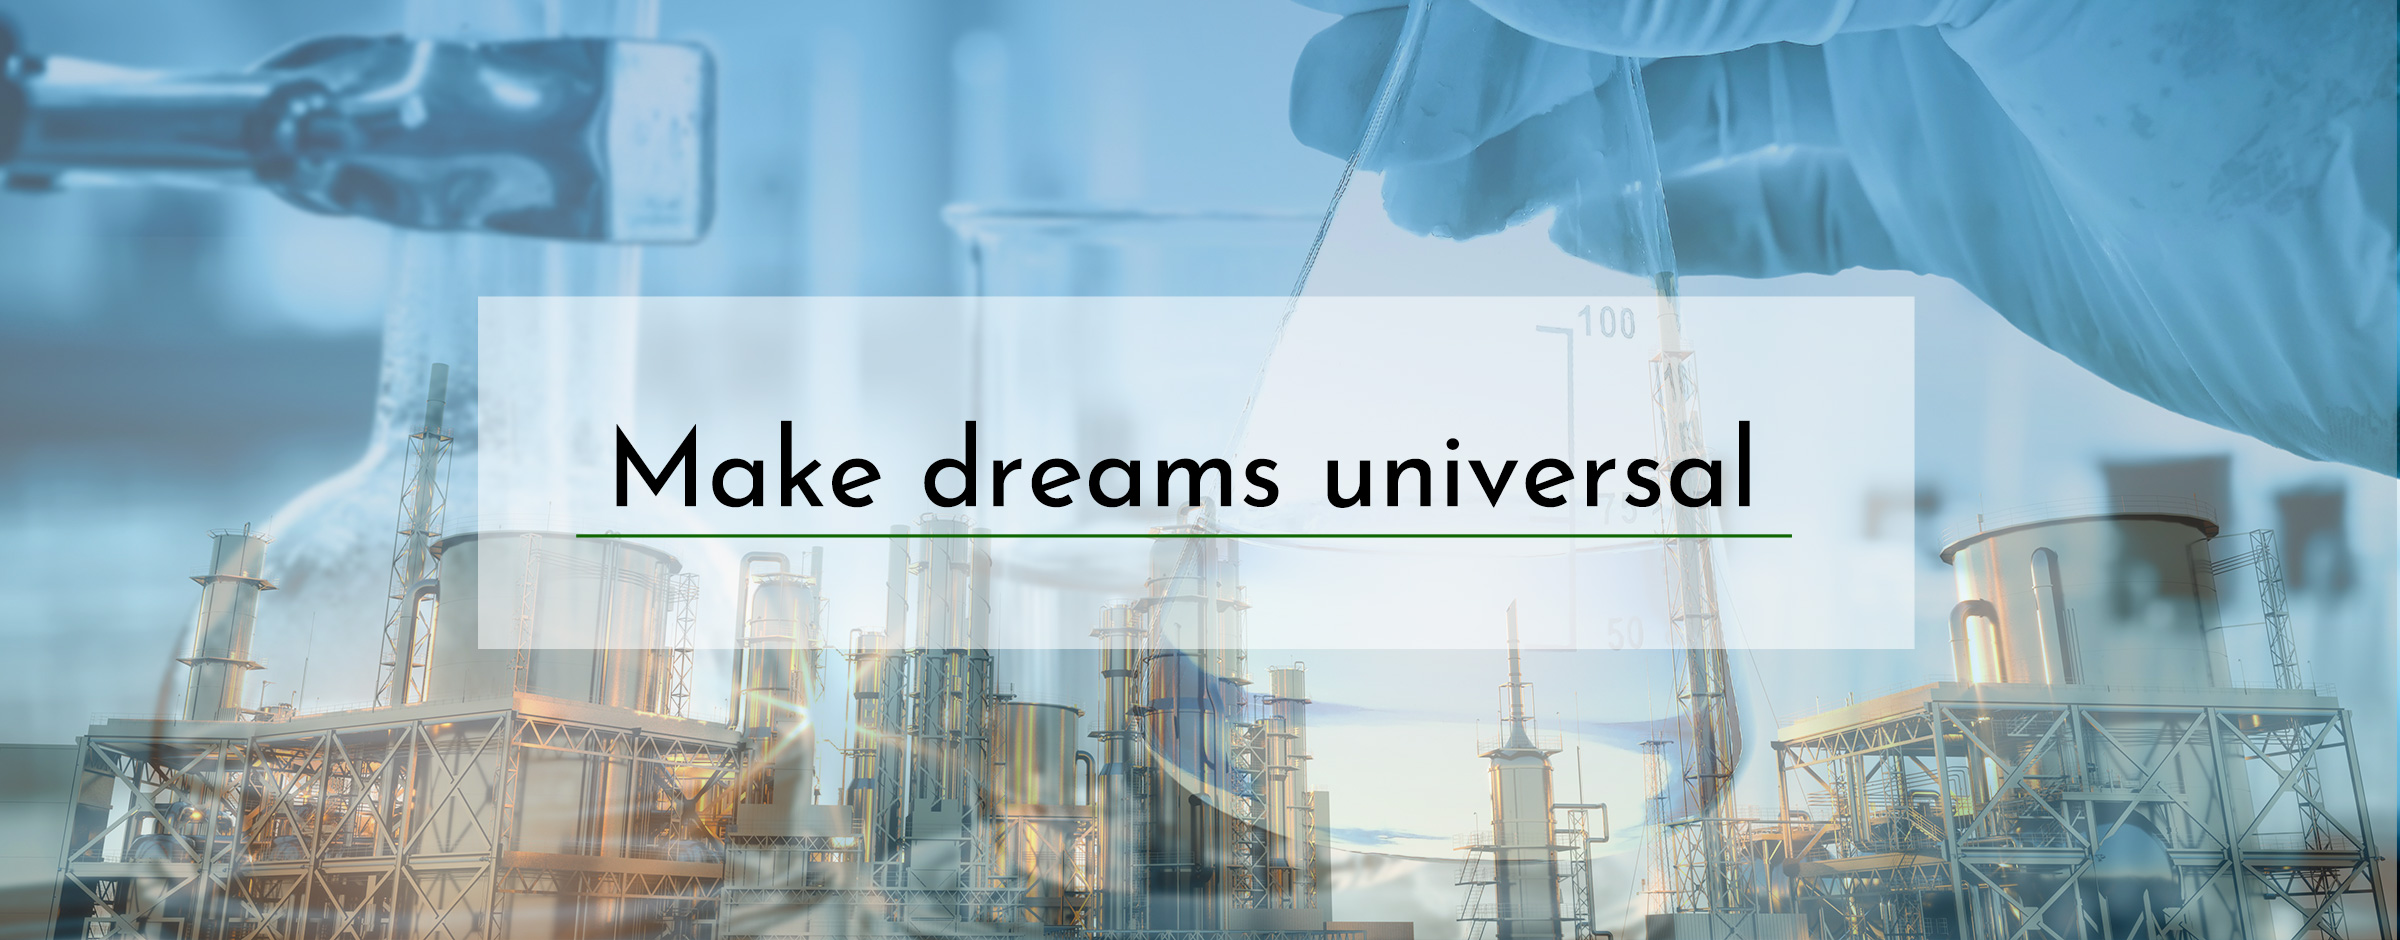 Make dreams universal